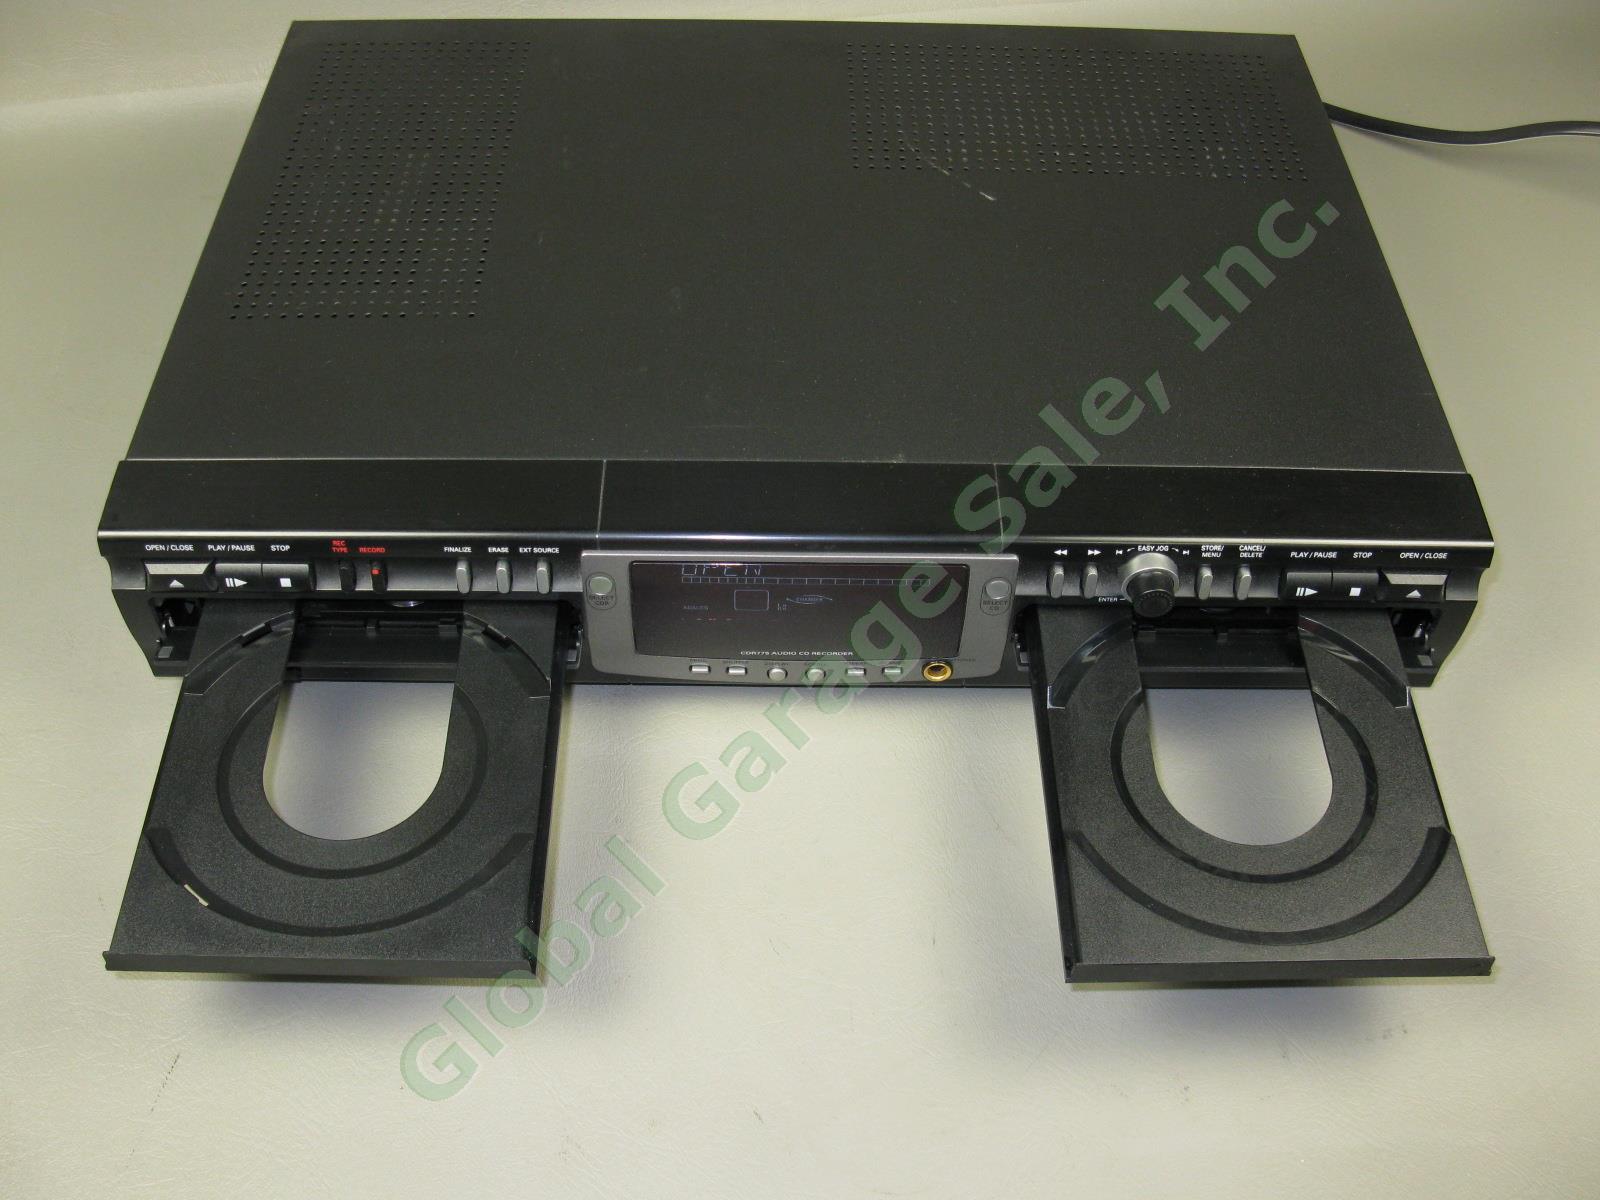 Philips CDR775 Dual Deck Audio CD Recorder Copier Burner + Remote Manual Bundle+ 2